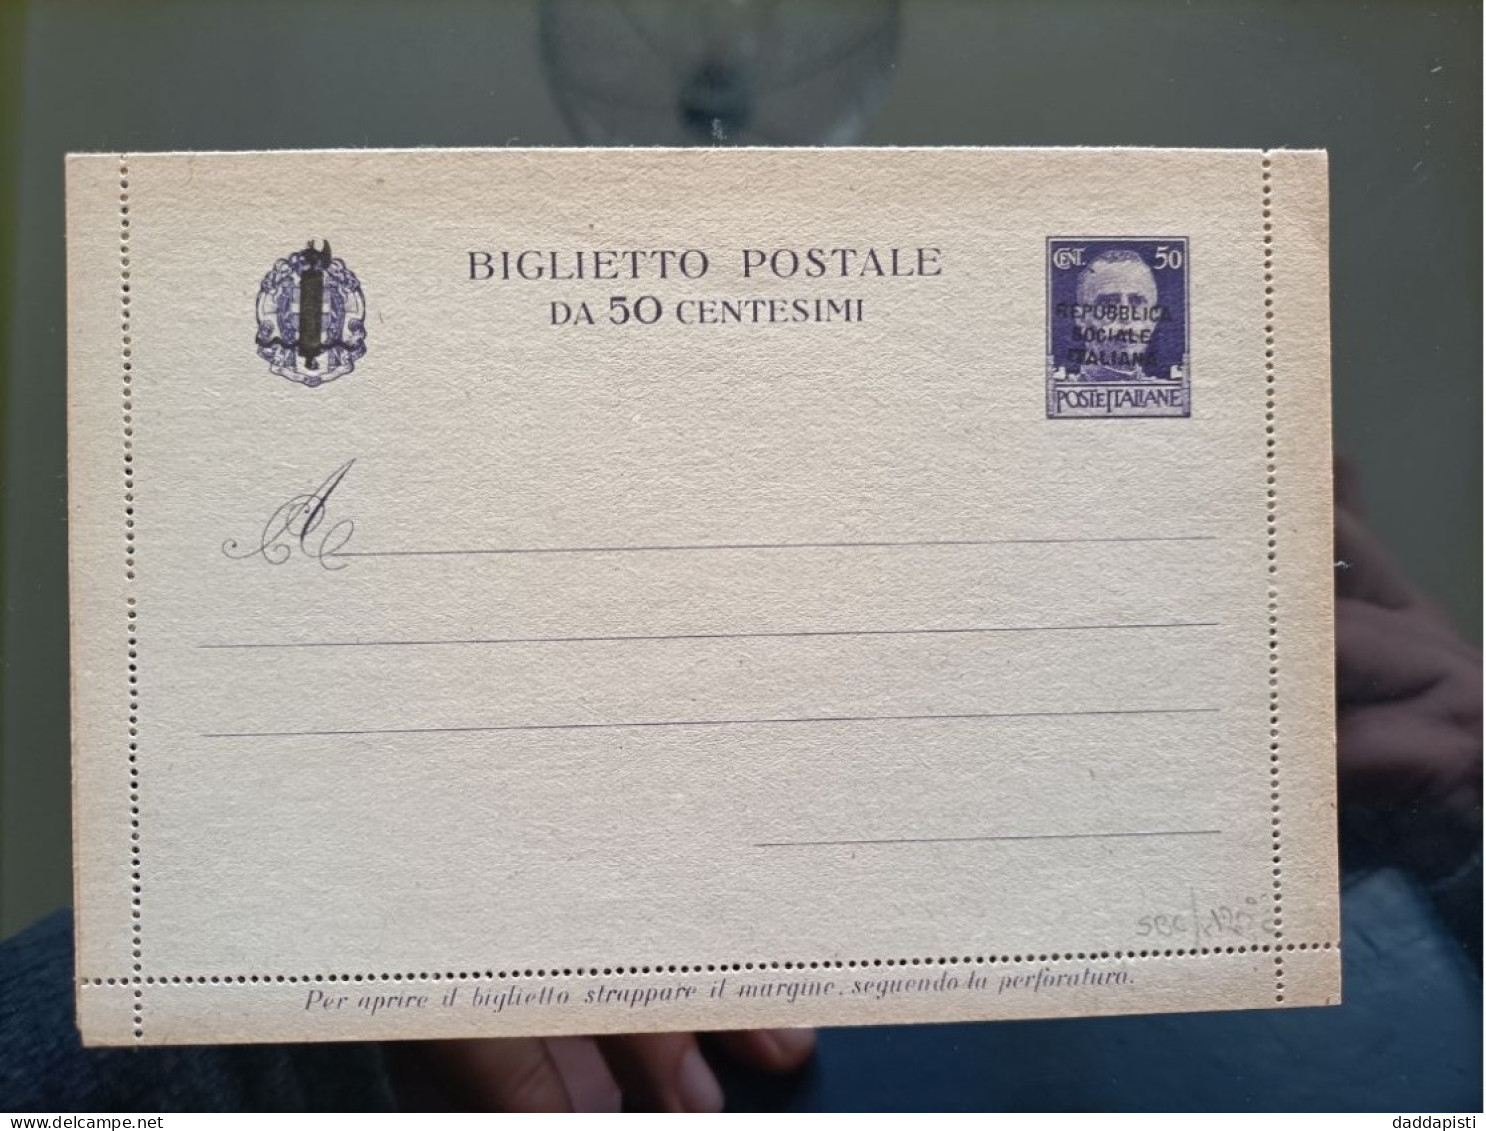 Biglietto Postale Da 50 Centesimi Nuovo Sovrastampato Rsi - Interi Postali